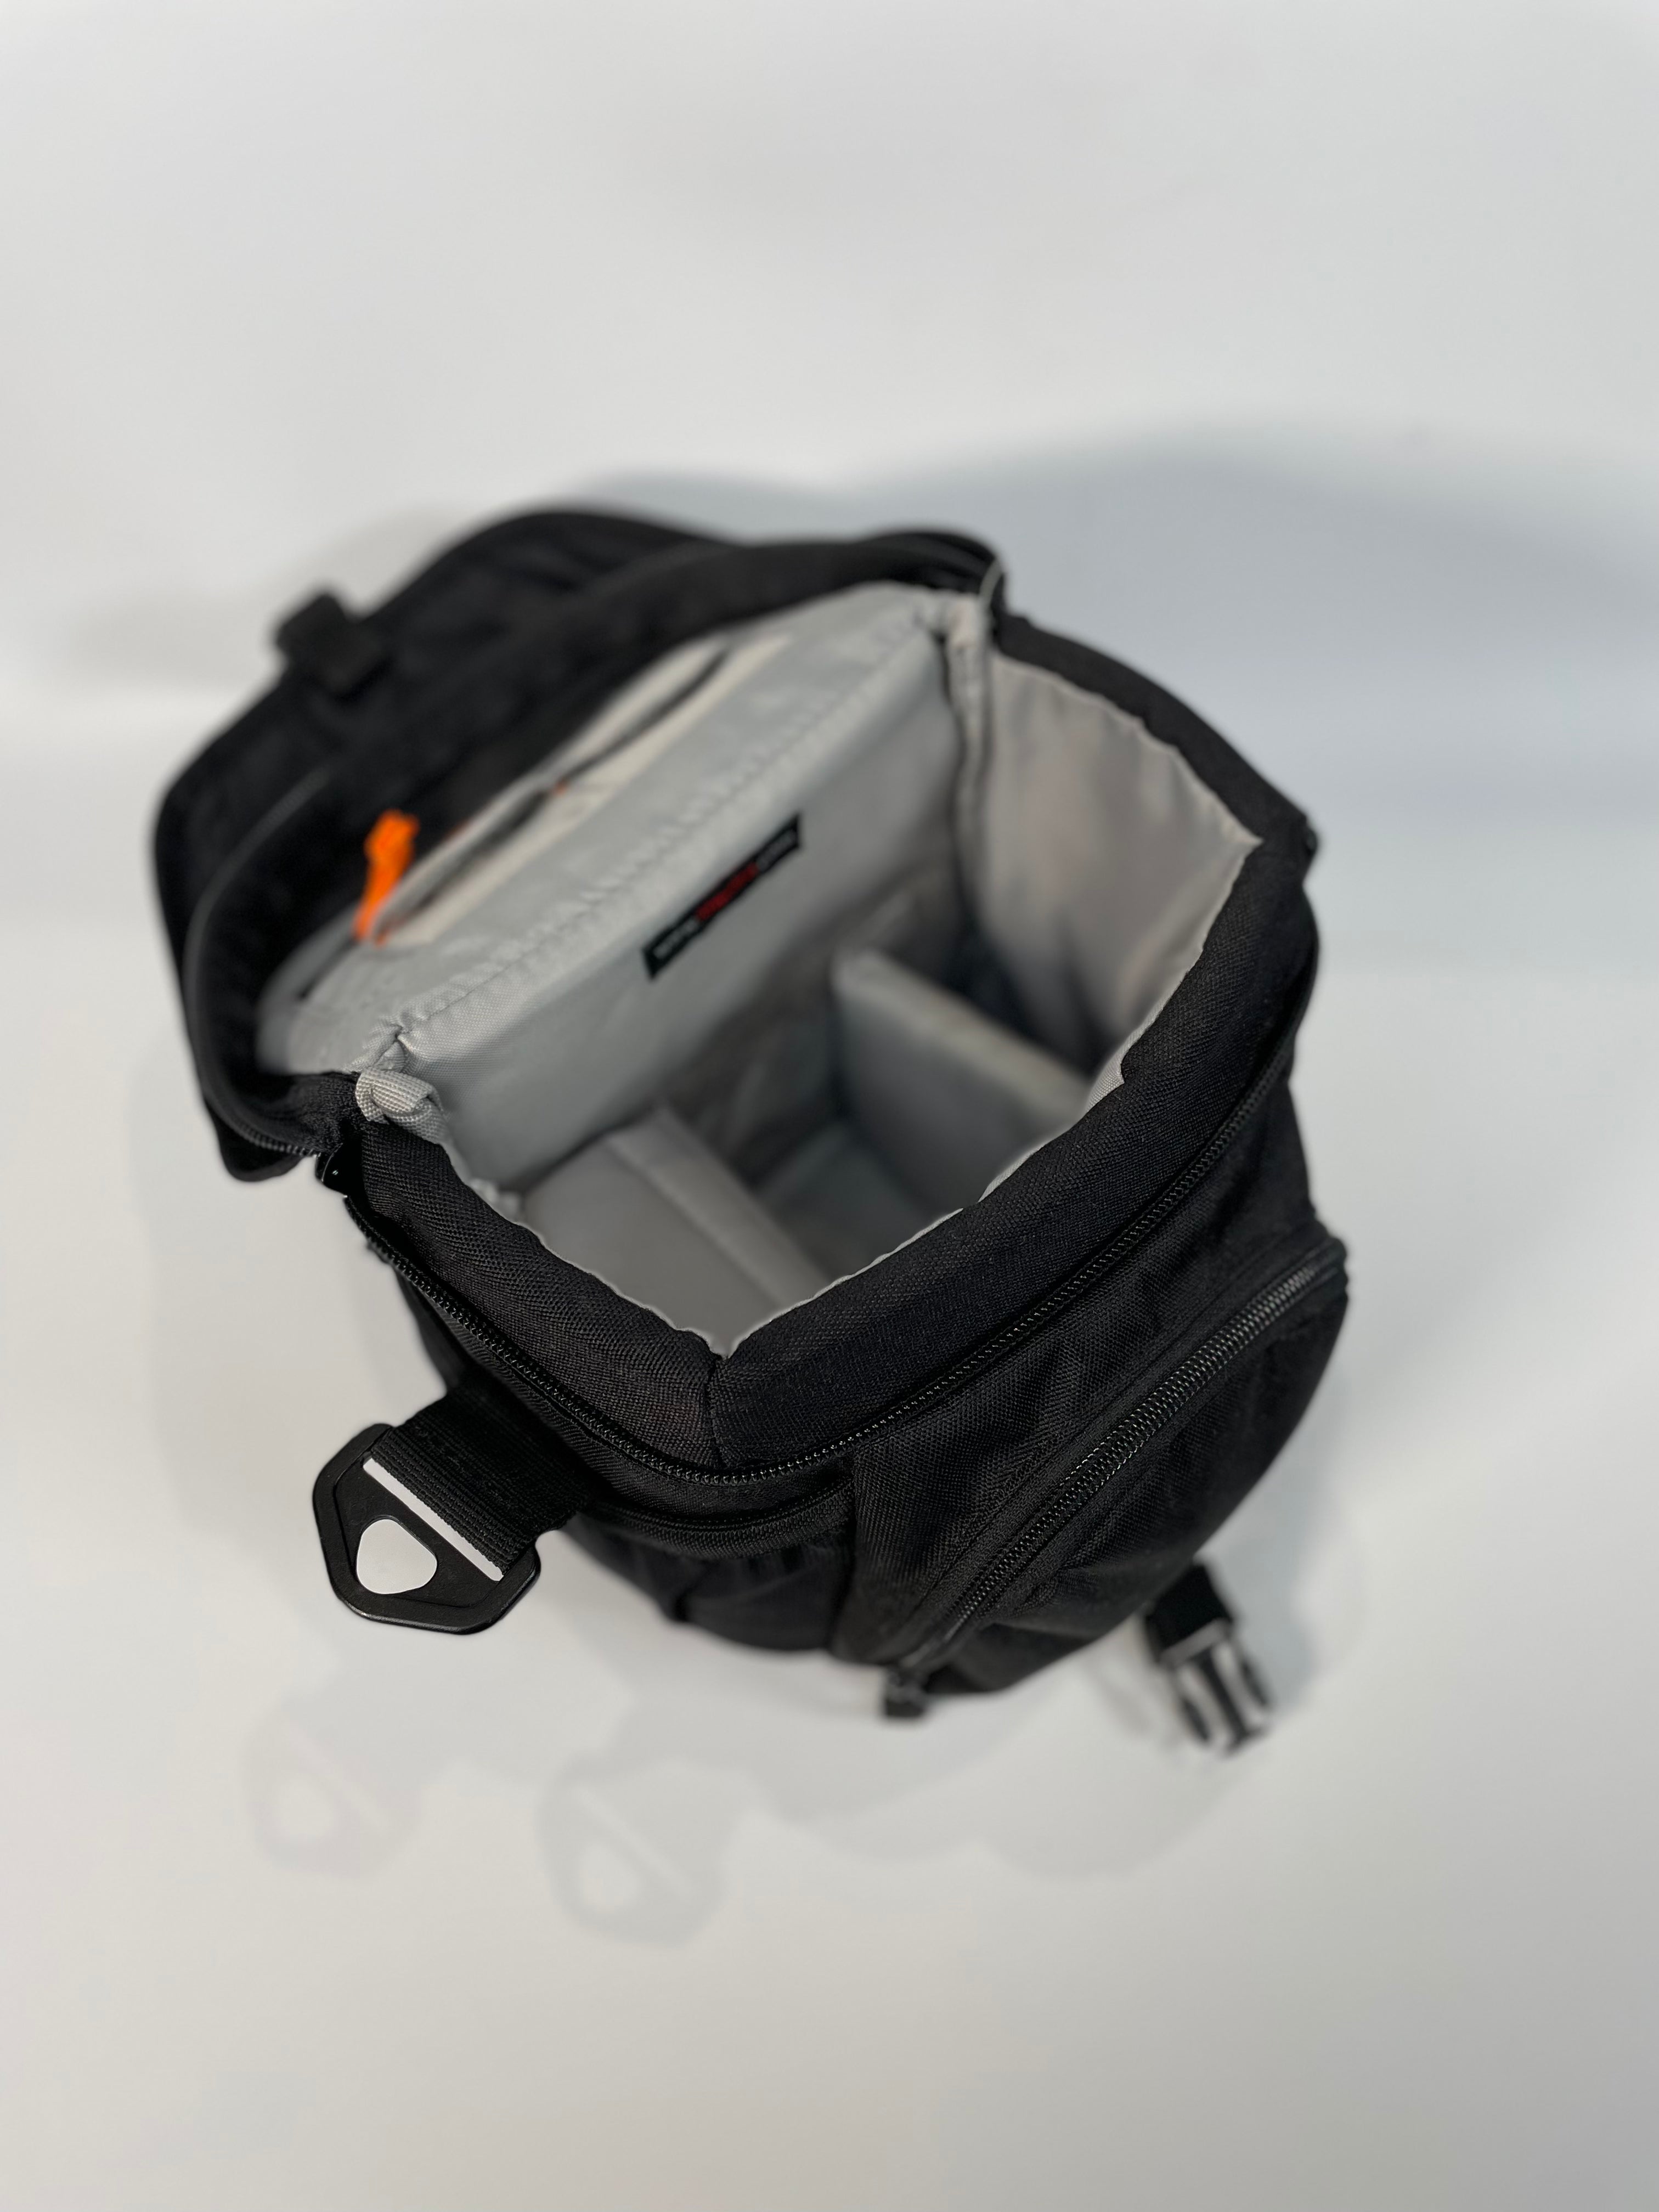 LowePro Nova Camera Bag